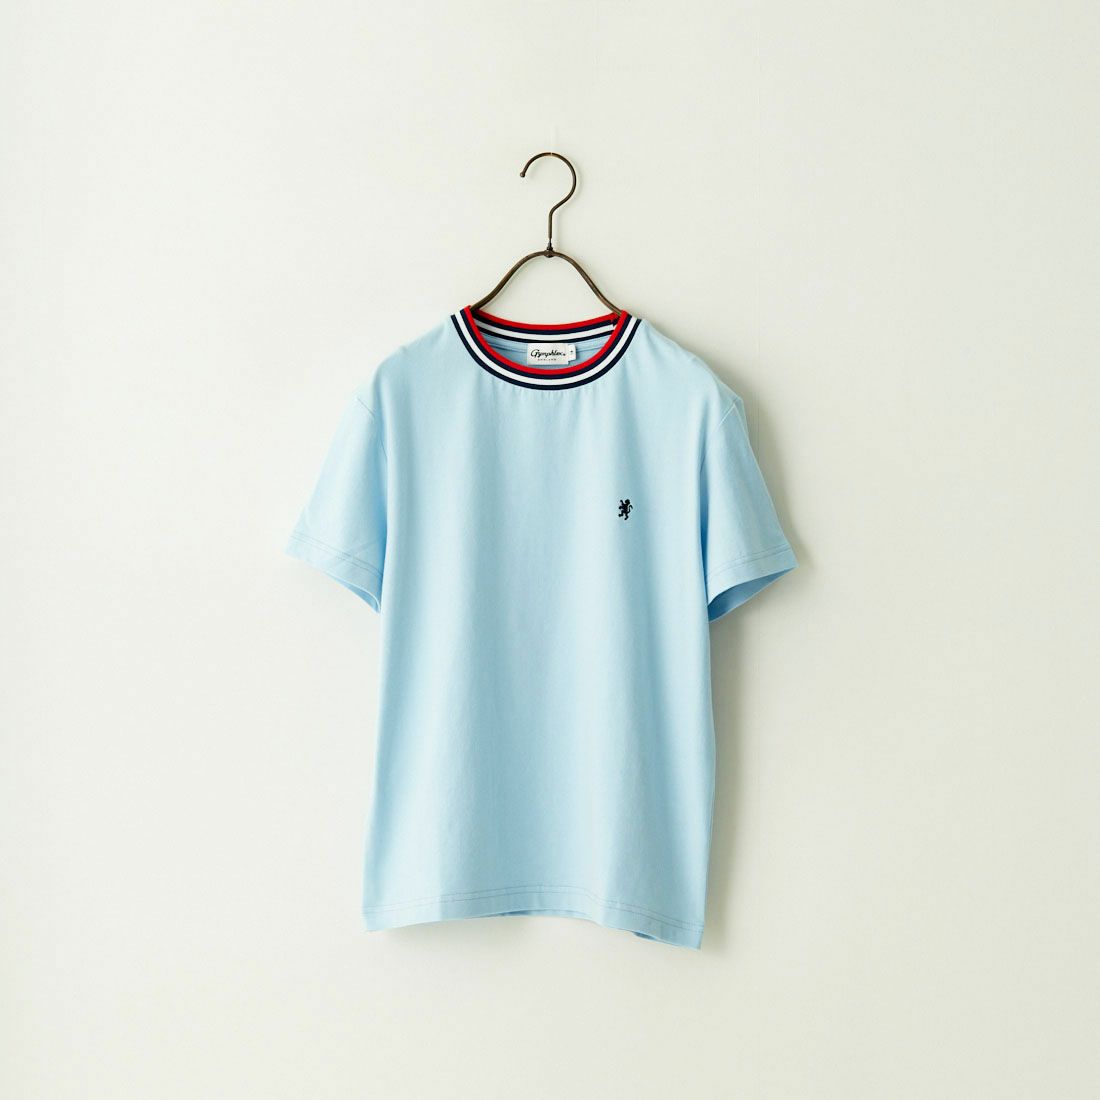 Gymphlex [ジムフレックス] クルーネック ニットラインTシャツ [GY-C0327CCB] SAX BLUE